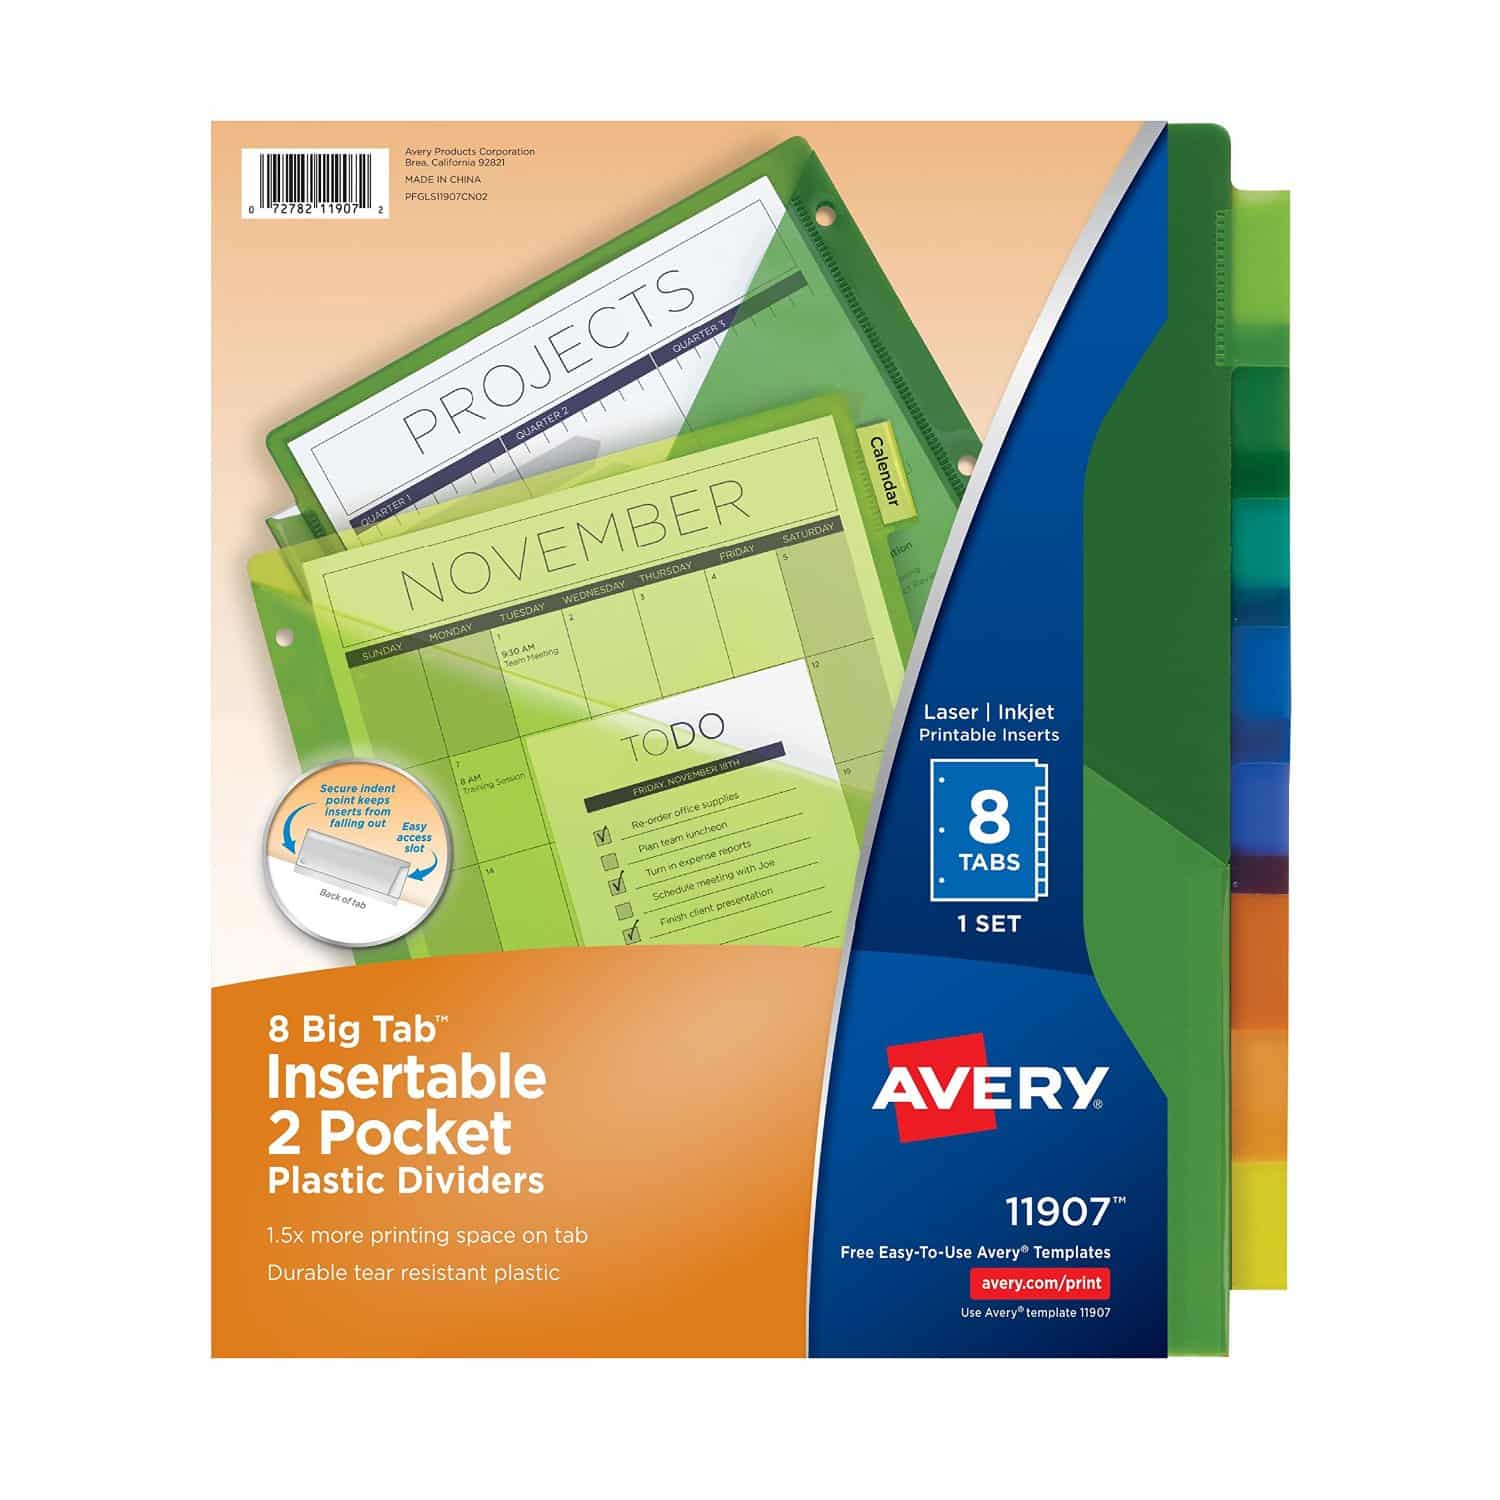 LIGHTNING DEAL ALERT! Avery Big Tab Insertable Two-Pocket Plastic Dividers, 8 Multicolor Tabs, 1 Set – 50% off! $1.75